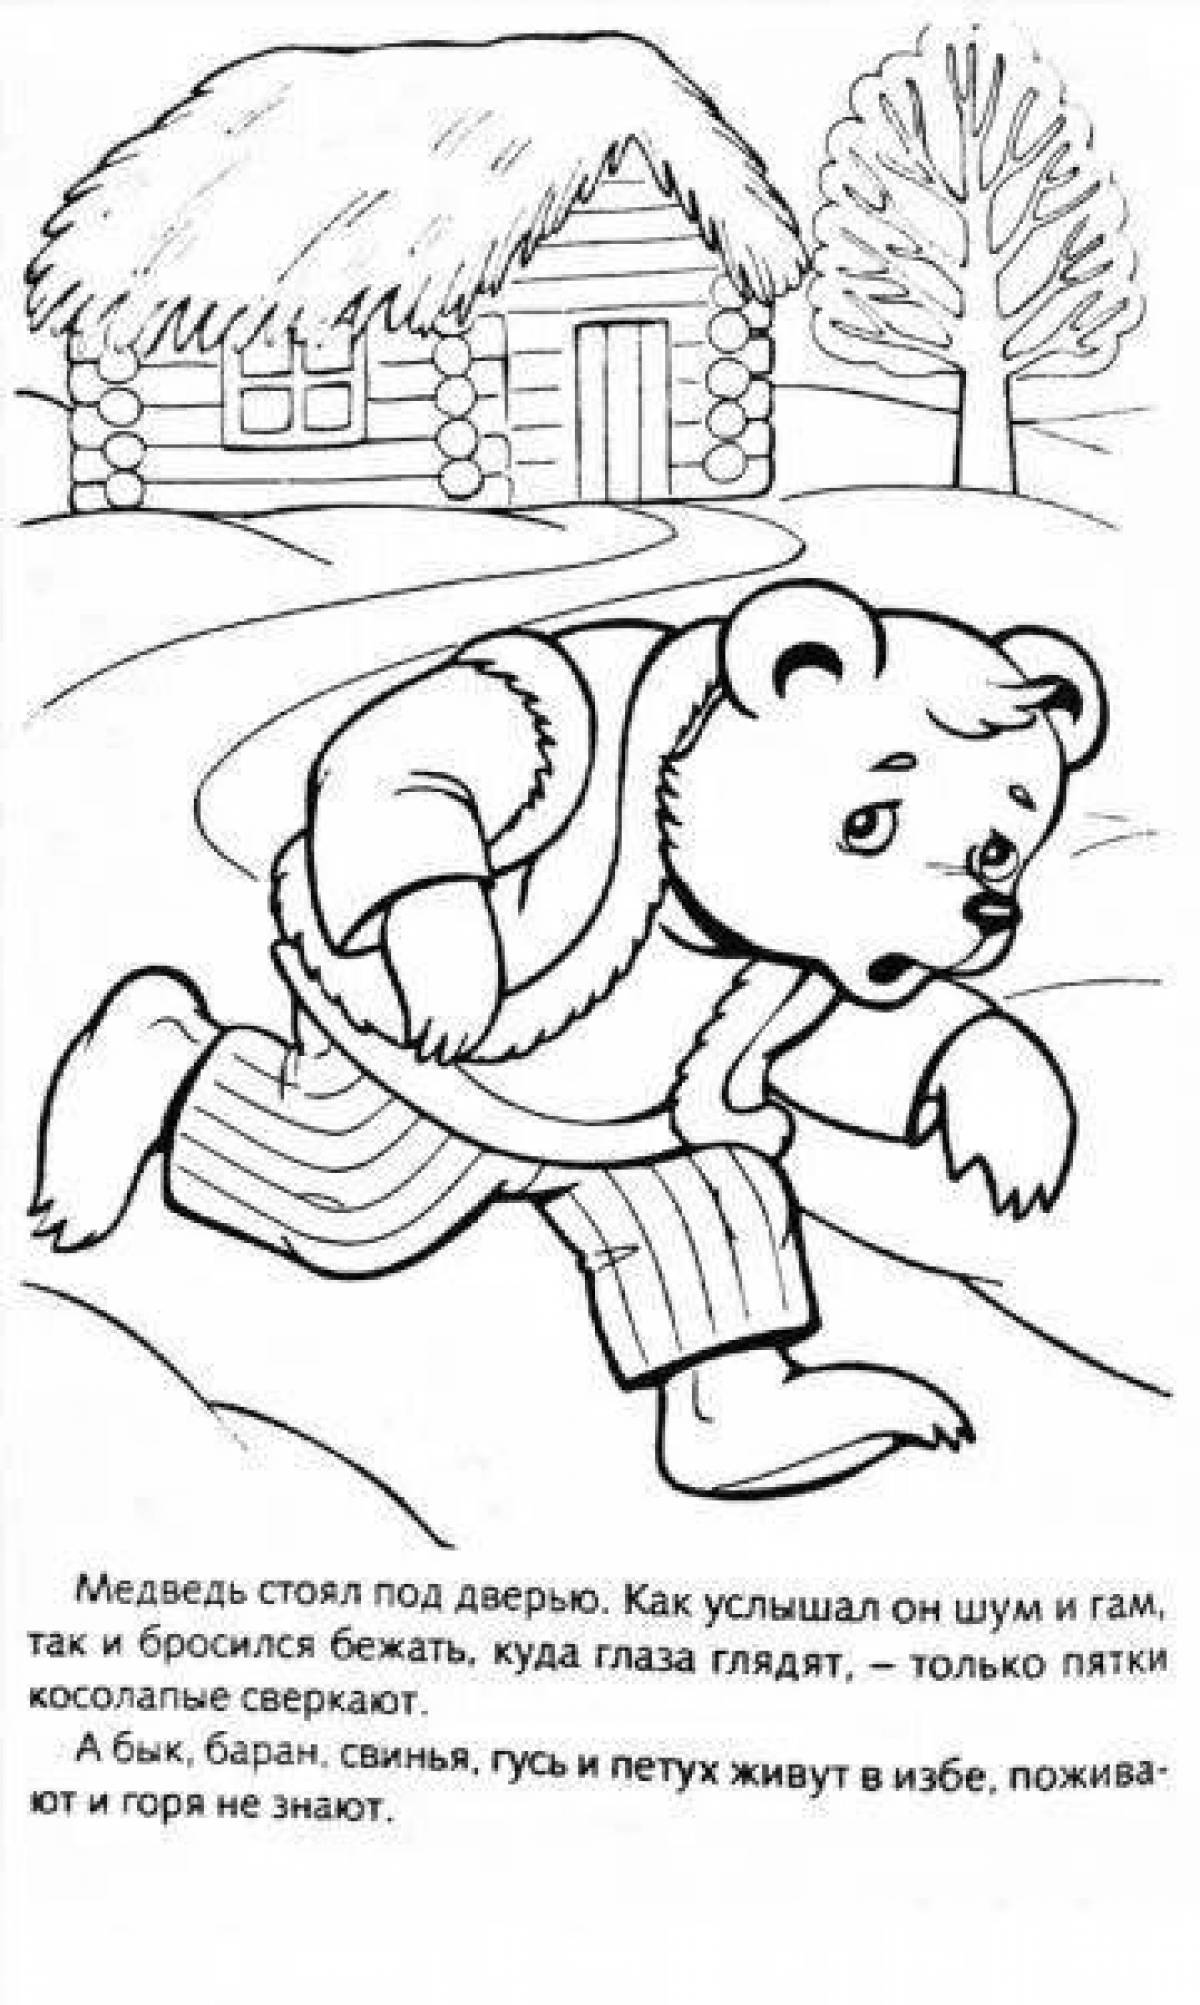 Медведь из сказки раскраска из сказки Заюшкина избушка